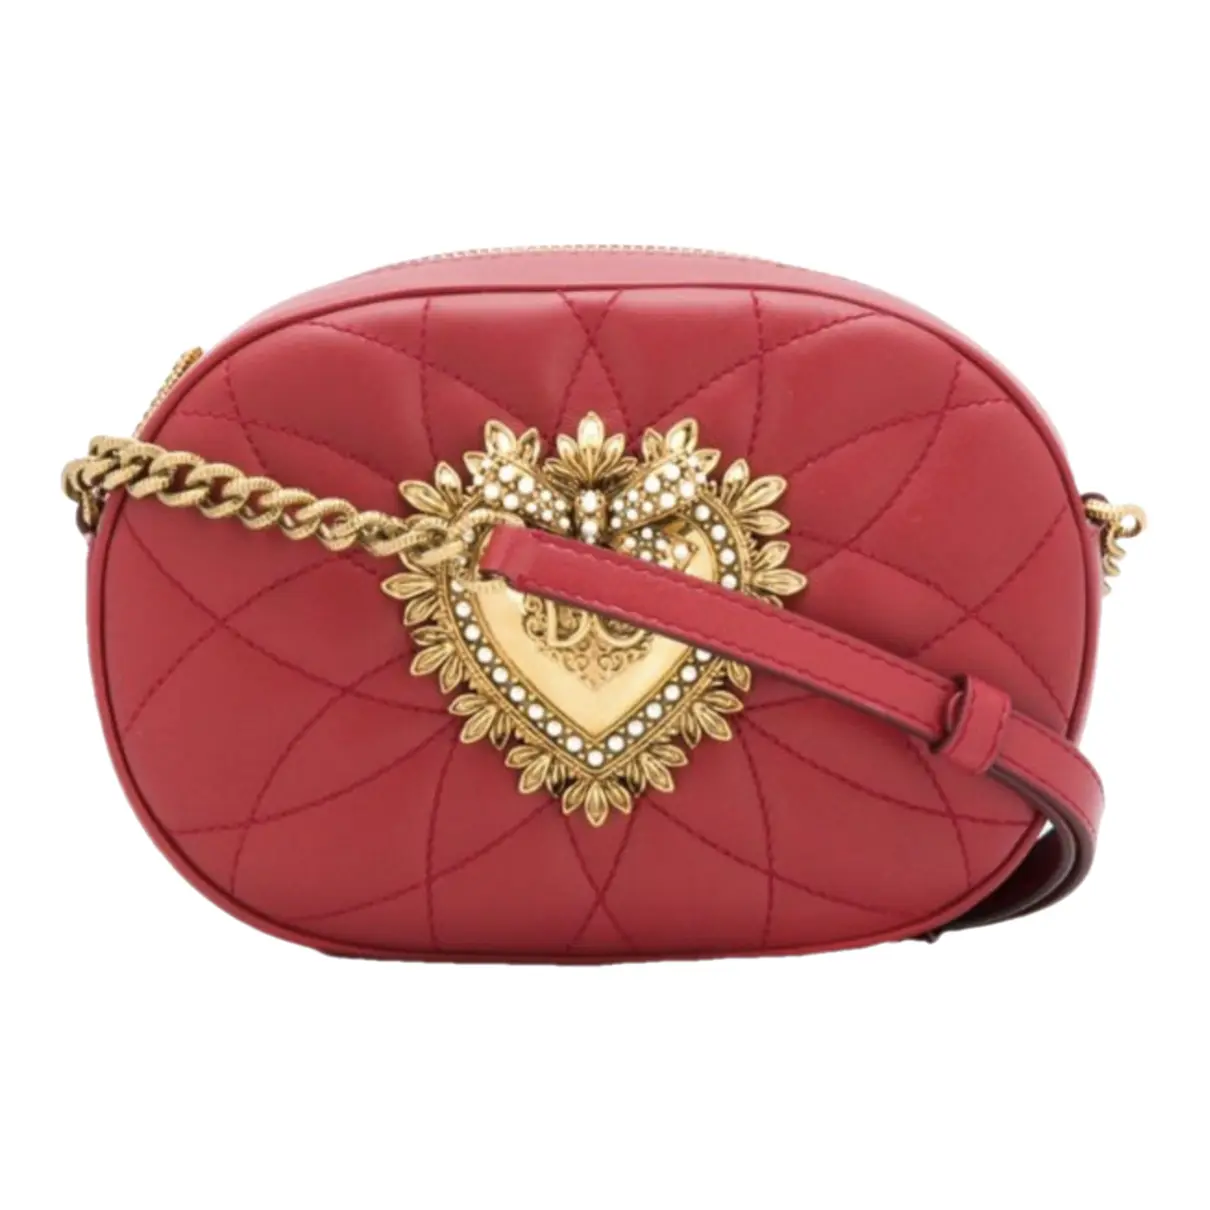 Devotion leather handbag